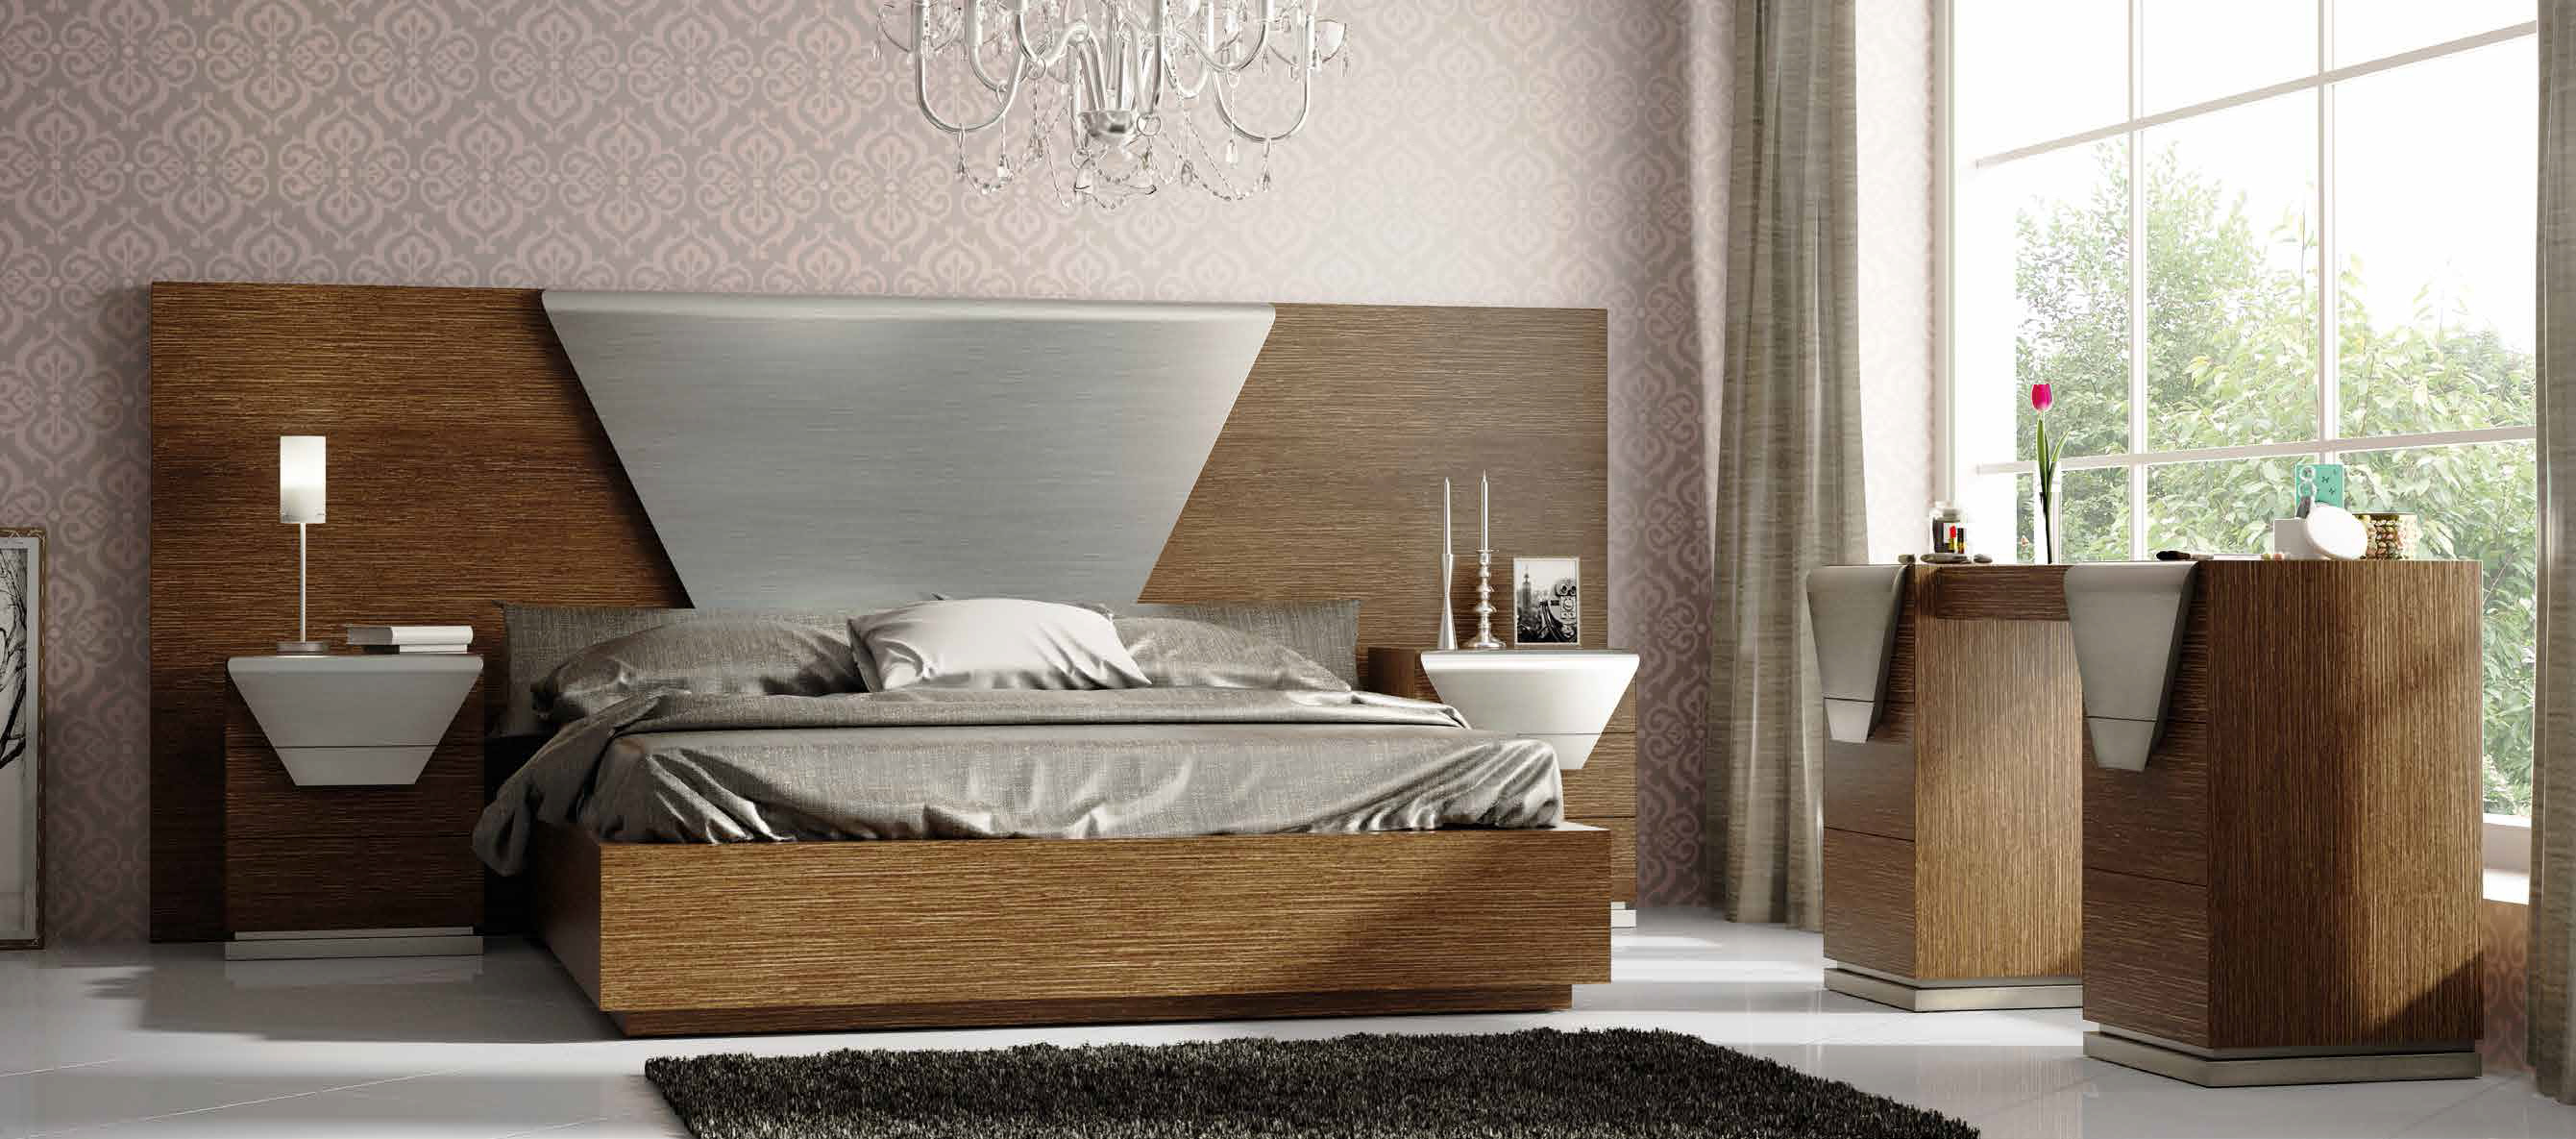 Brands Franco Furniture Bedrooms vol1, Spain DOR 86